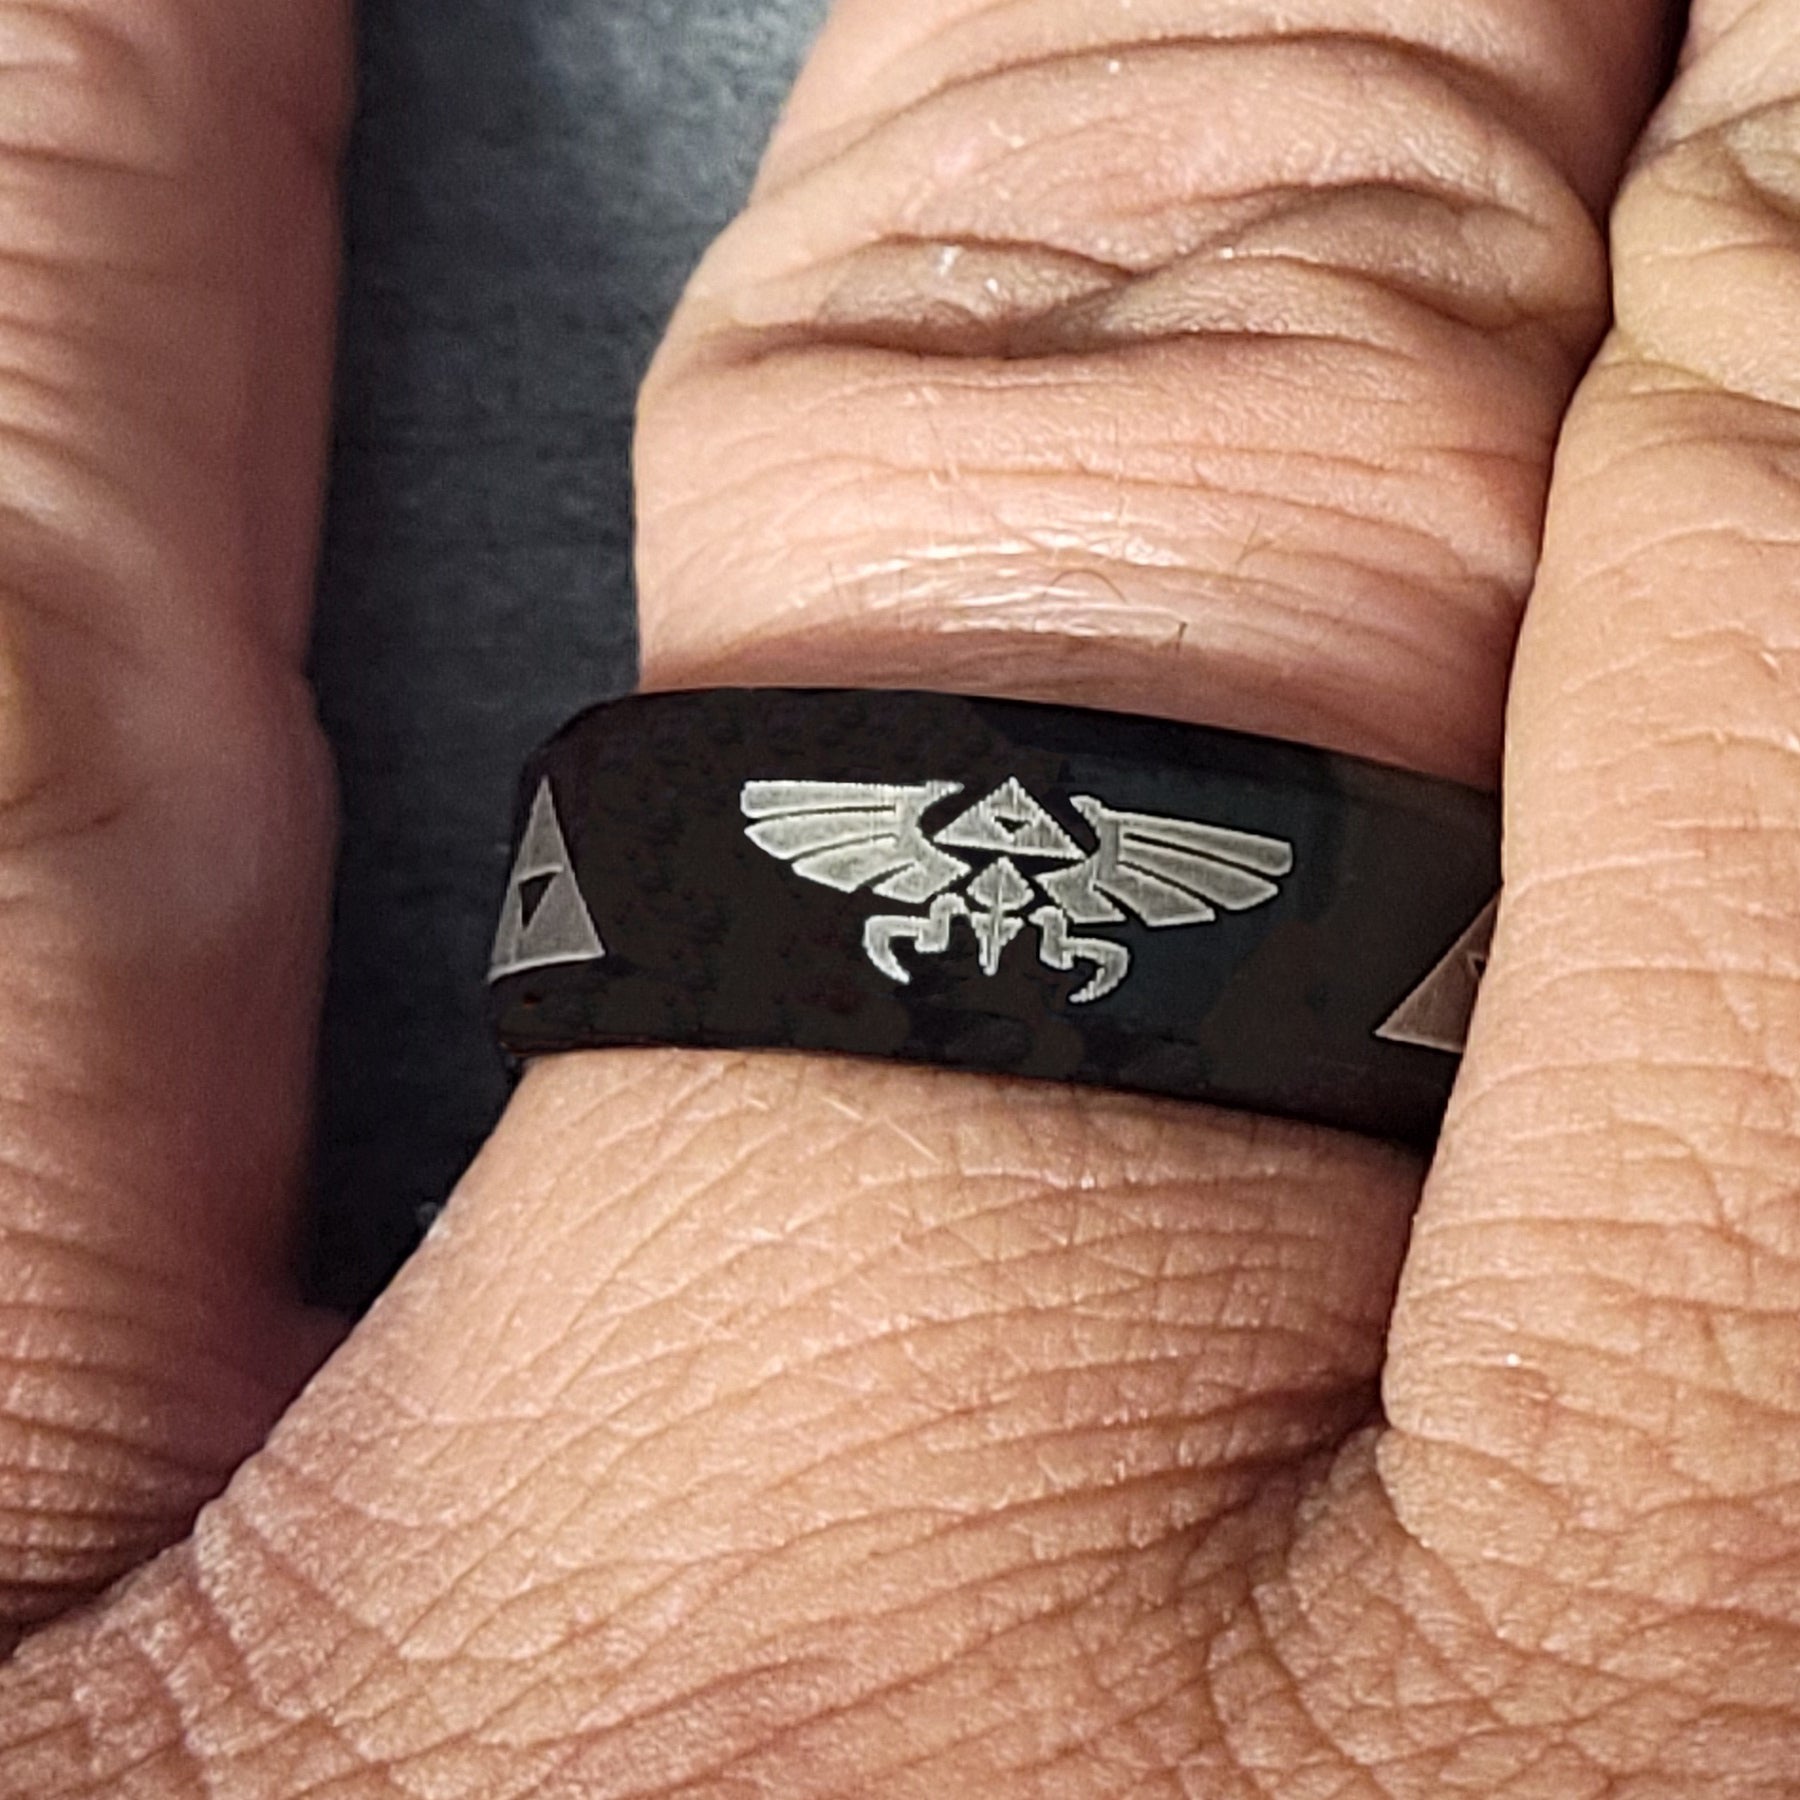 Think Engraved wedding Ring Personalized Engraved Men's Black Zelda Tri Force Wedding Ring